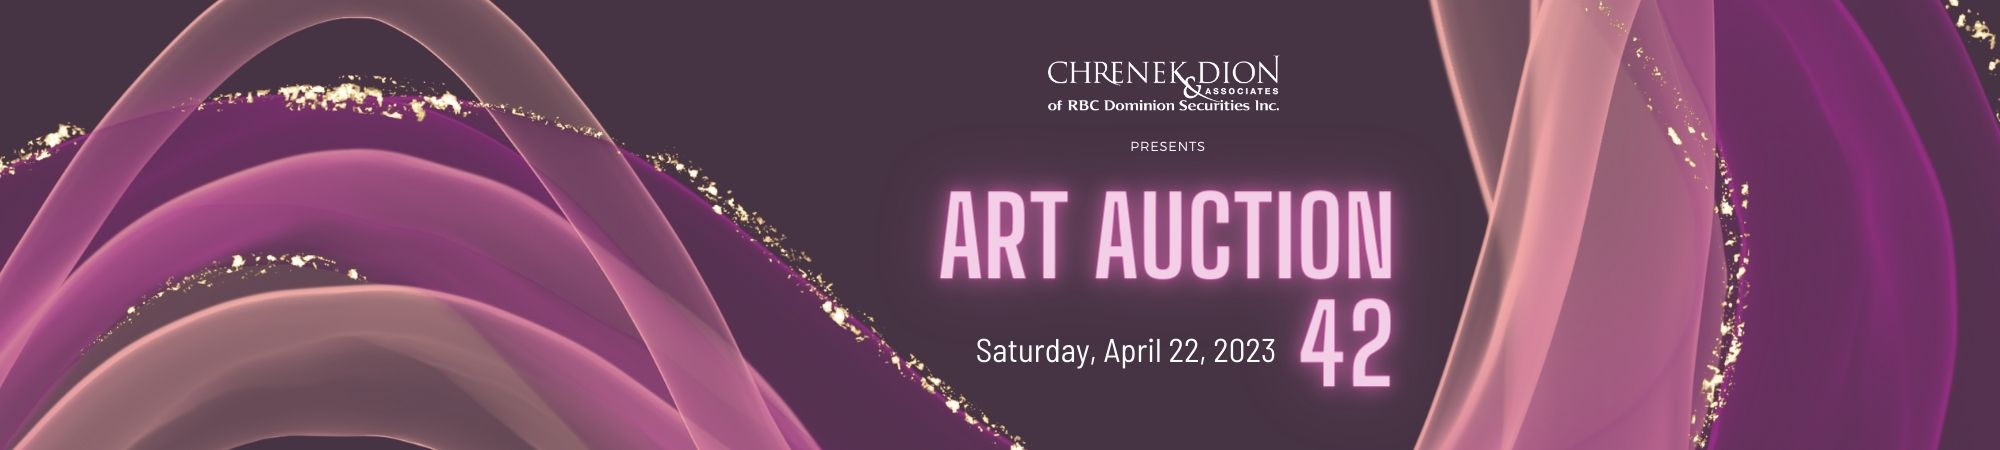 Art Auction 42 - pink